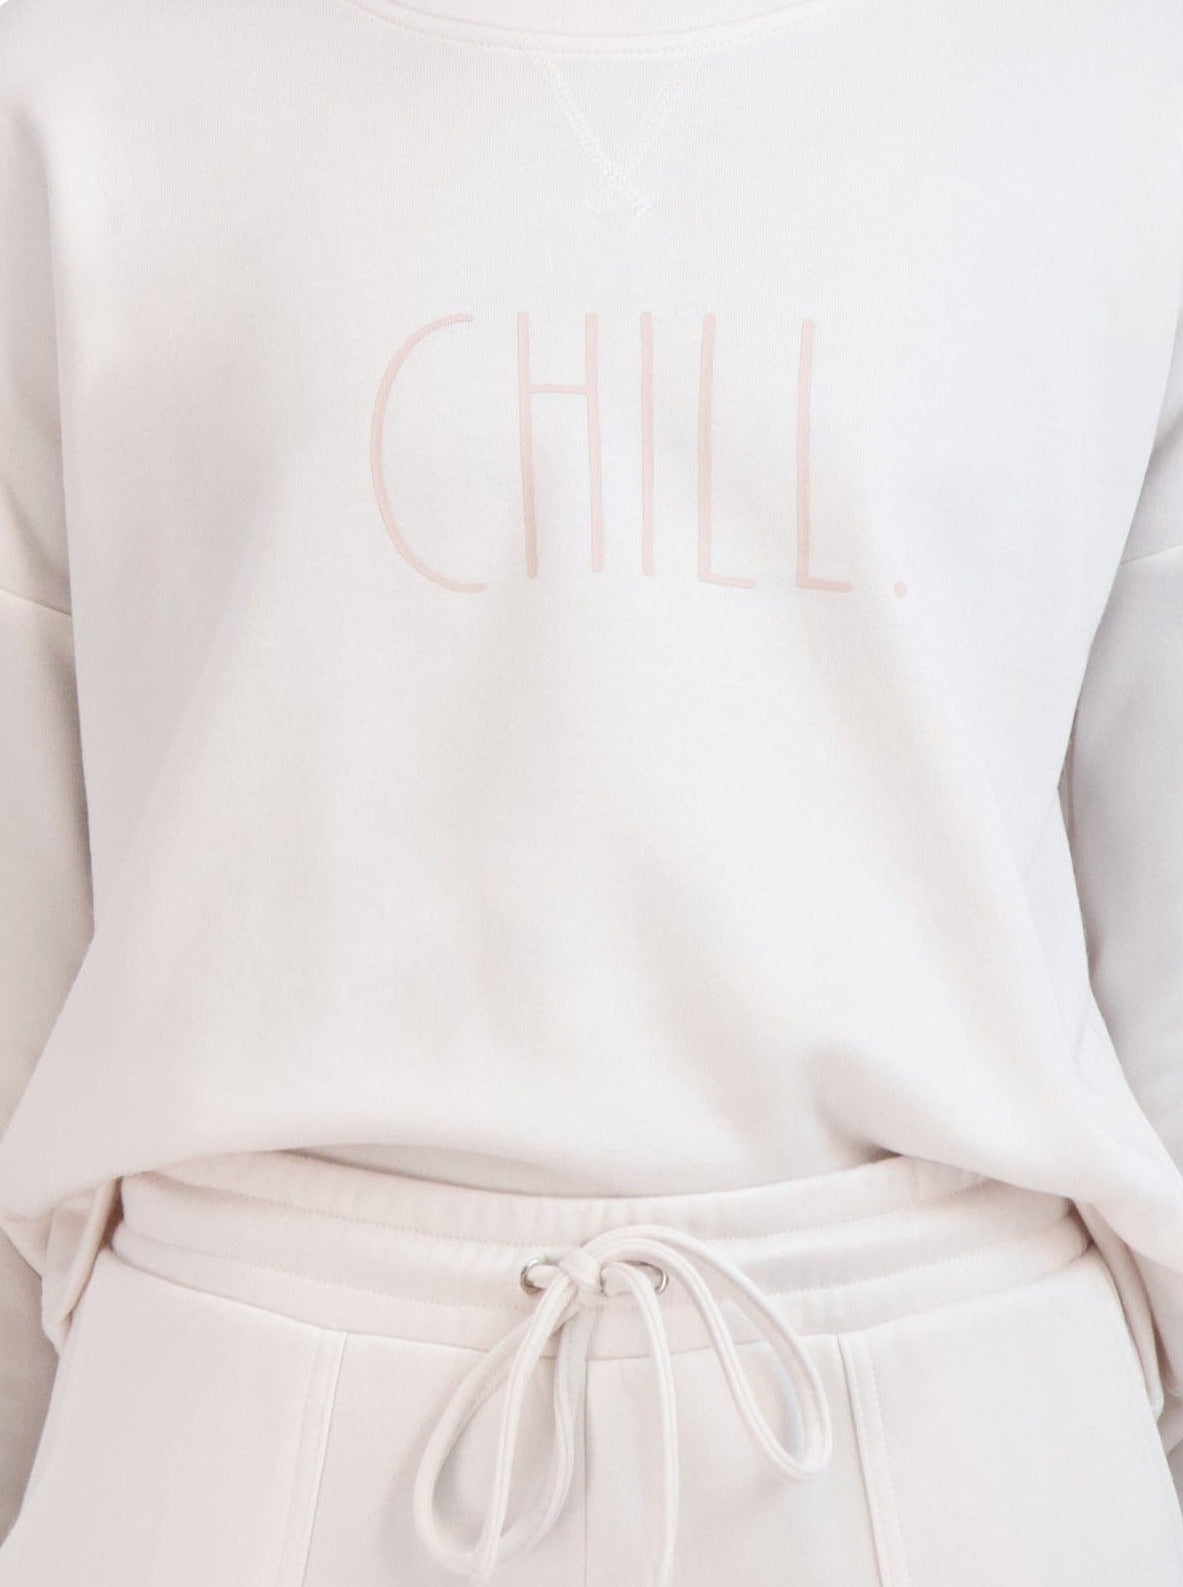 Women's "CHILL" Pullover Sweatshirt and Drawstring Sweatpants Lounge Set - Rae Dunn Wear